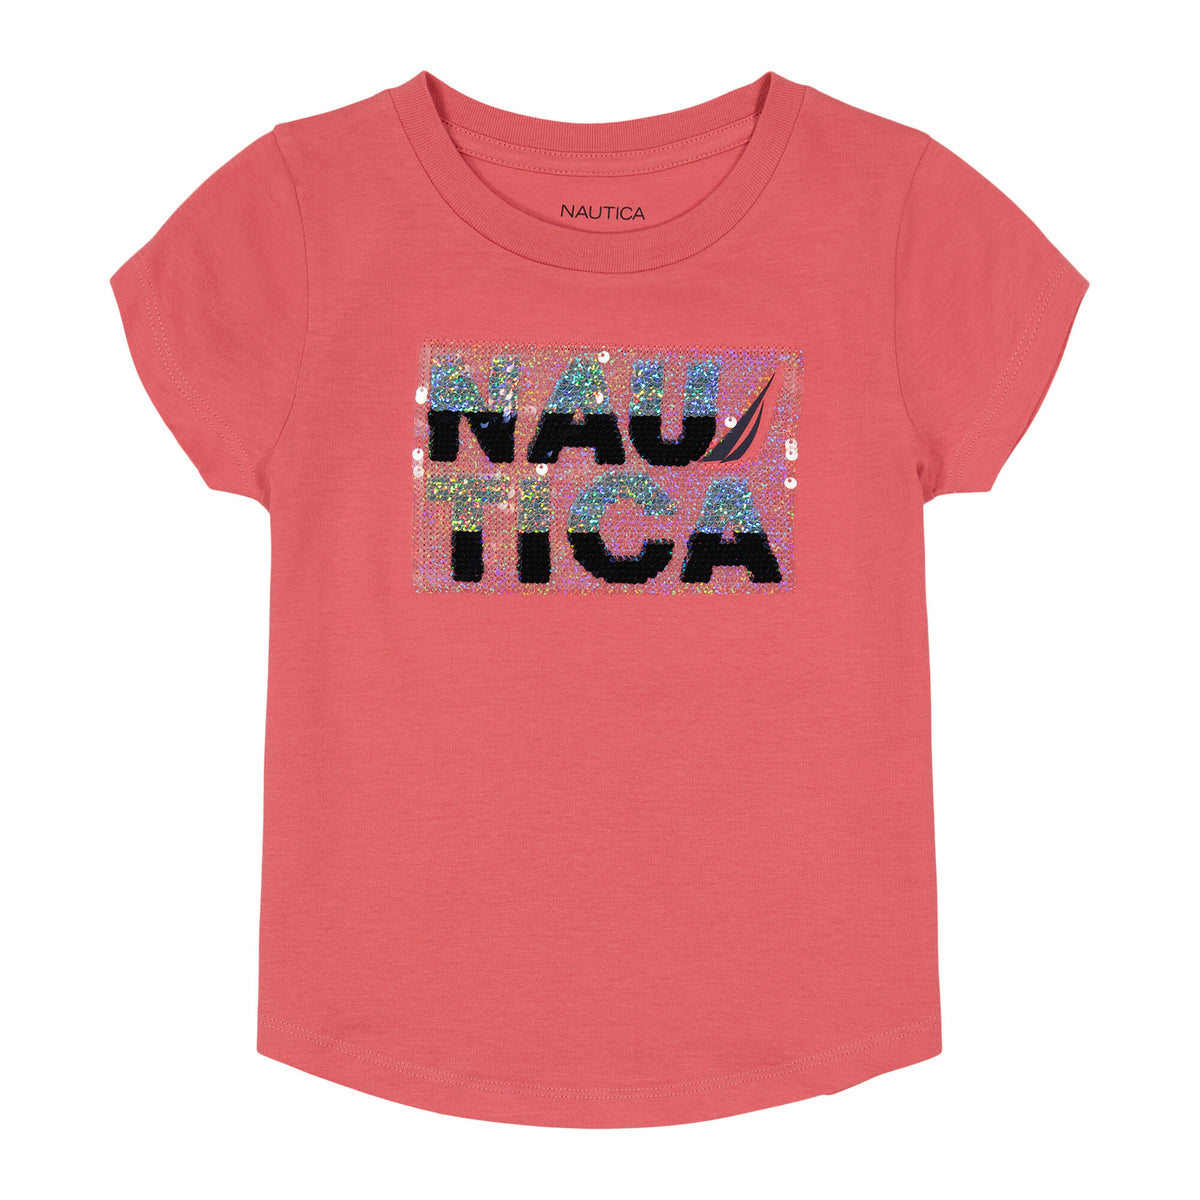 Nautica Toddler Girls' Magic Sequin T-Shirt (2T-4T) Raspberry